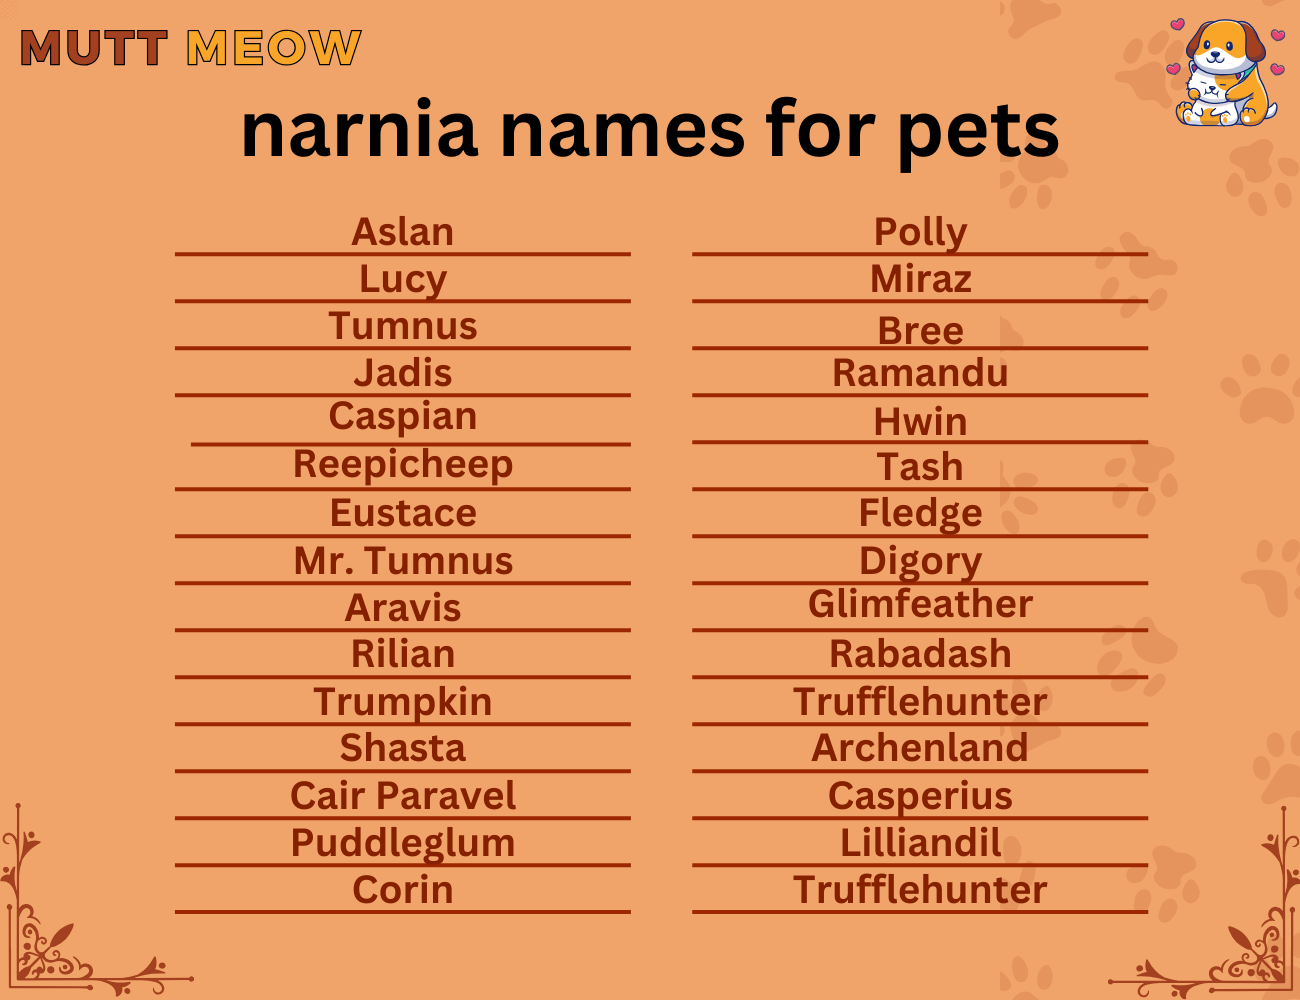 narnia names for pets